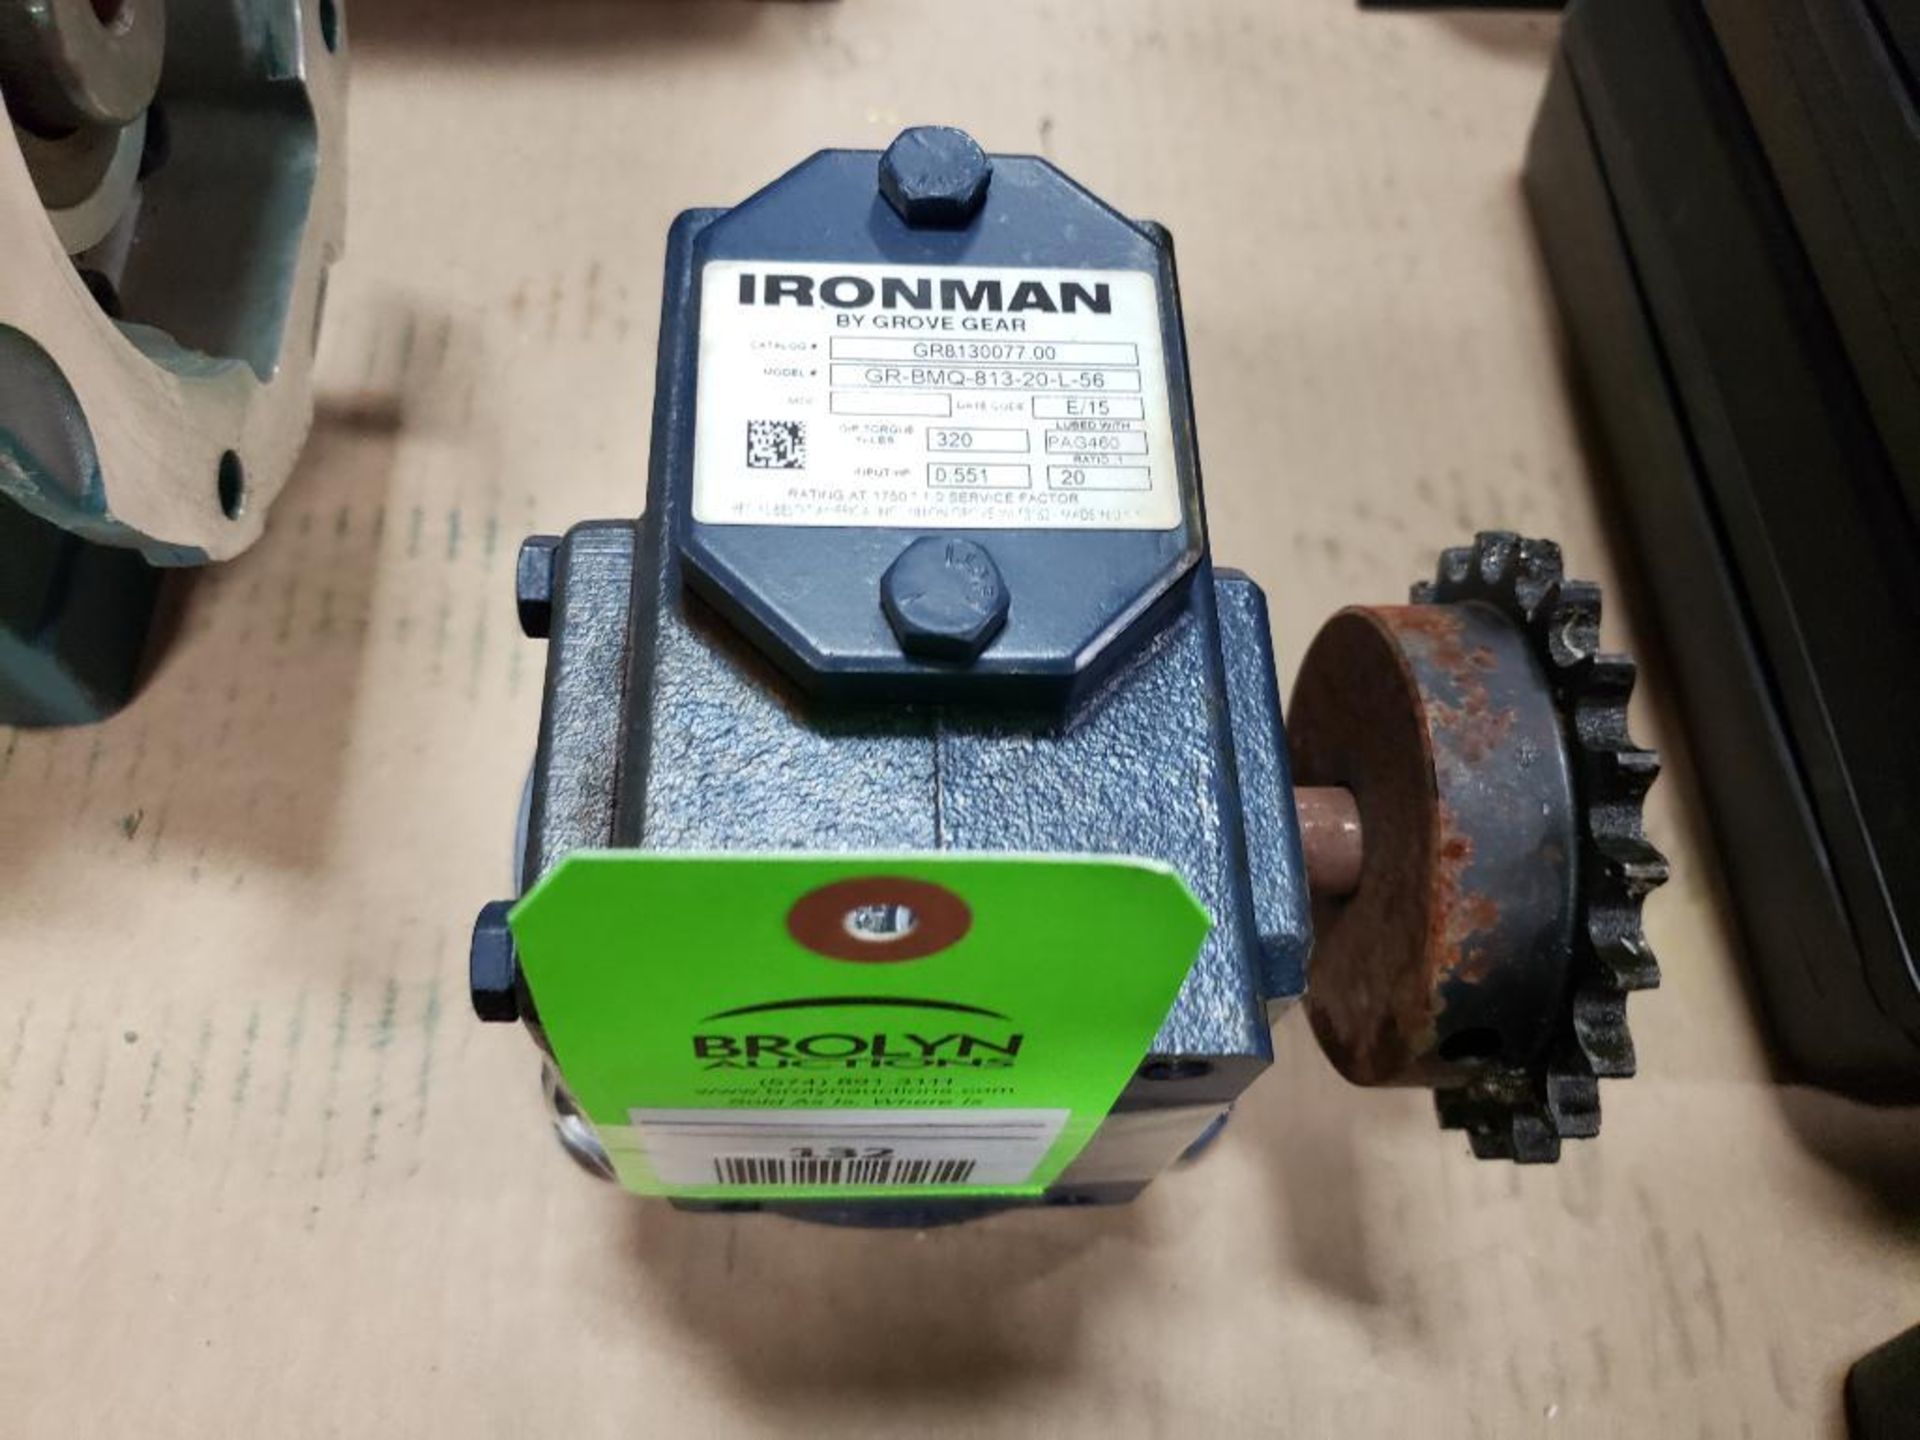 Grove Gear Ironman gearbox. GR8.130077.00. GR-BMQ-813-20-L-56 20:1 Ratio.